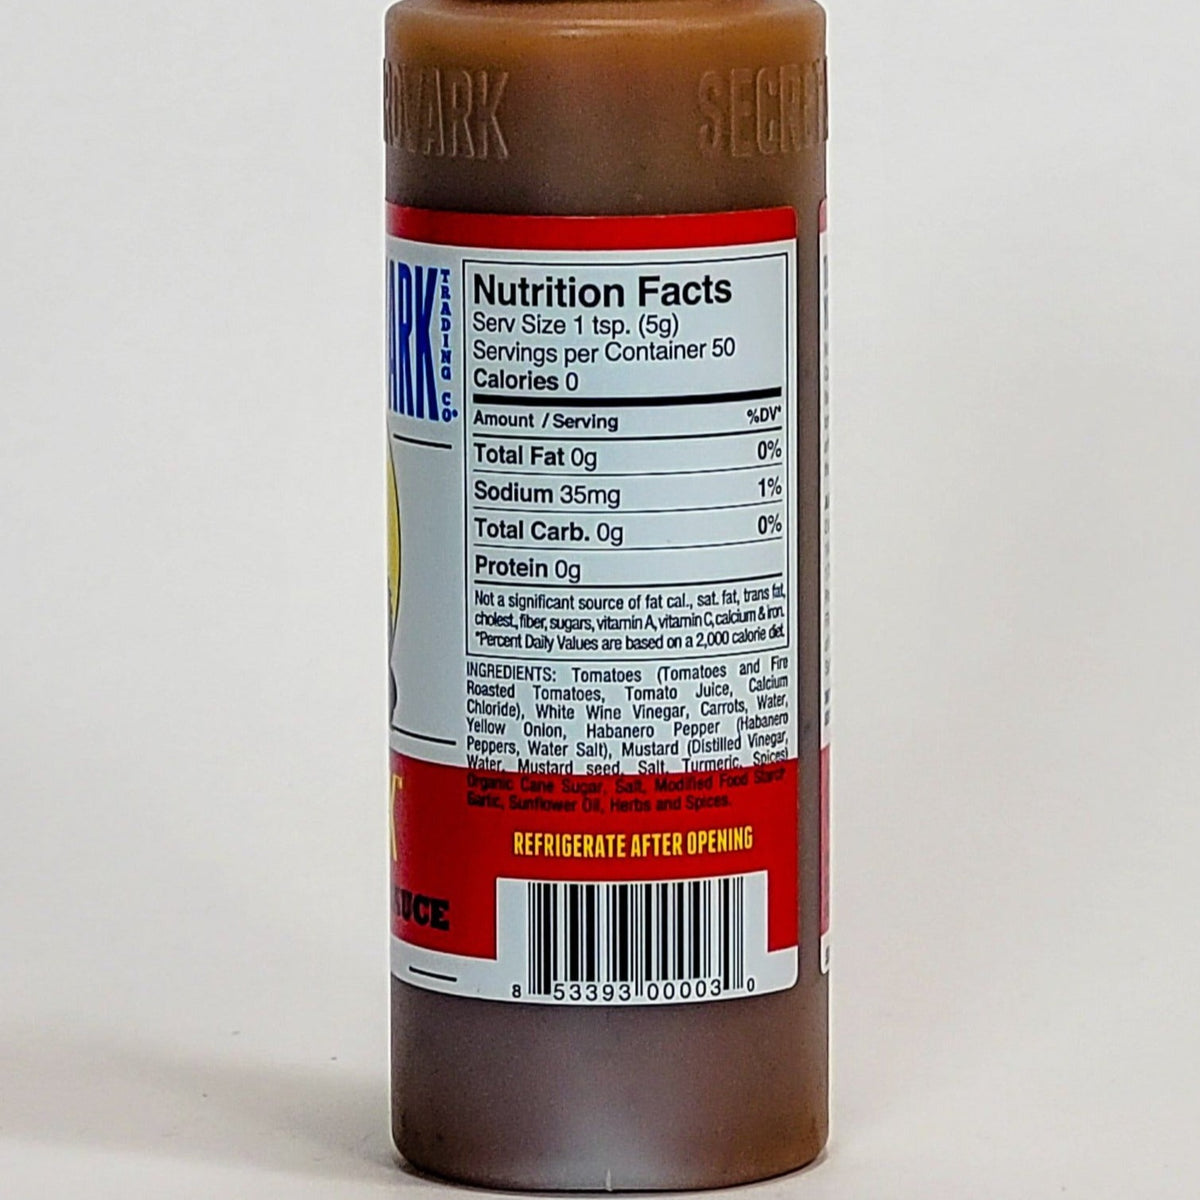 secret aardvark habanero hot sauce nutritional information